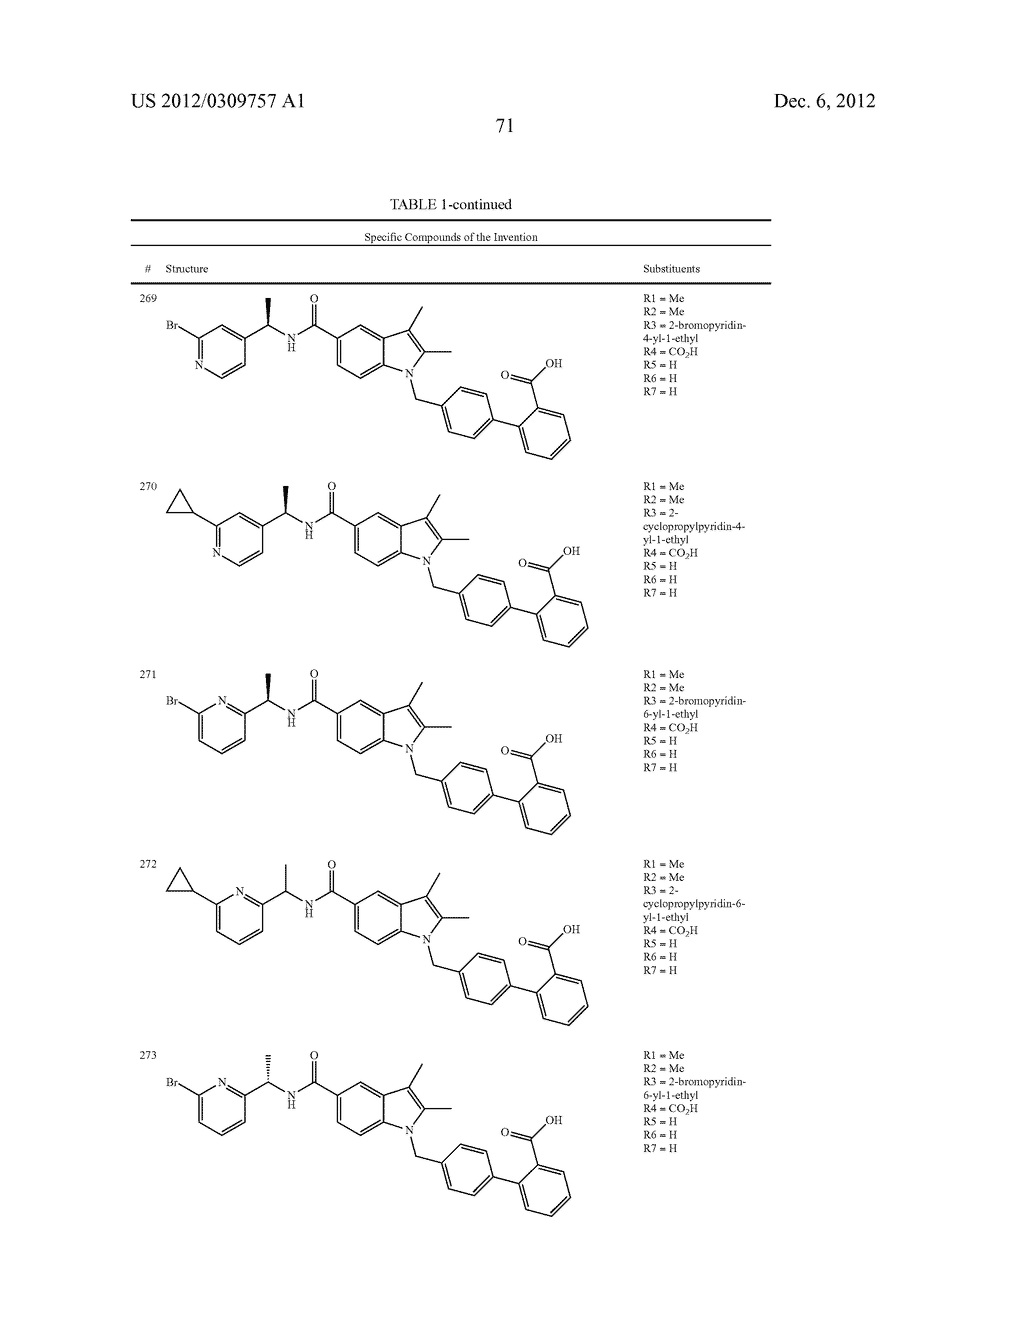 N-BIPHENYLMETHYLINDOLE MODULATORS OF PPARG - diagram, schematic, and image 86